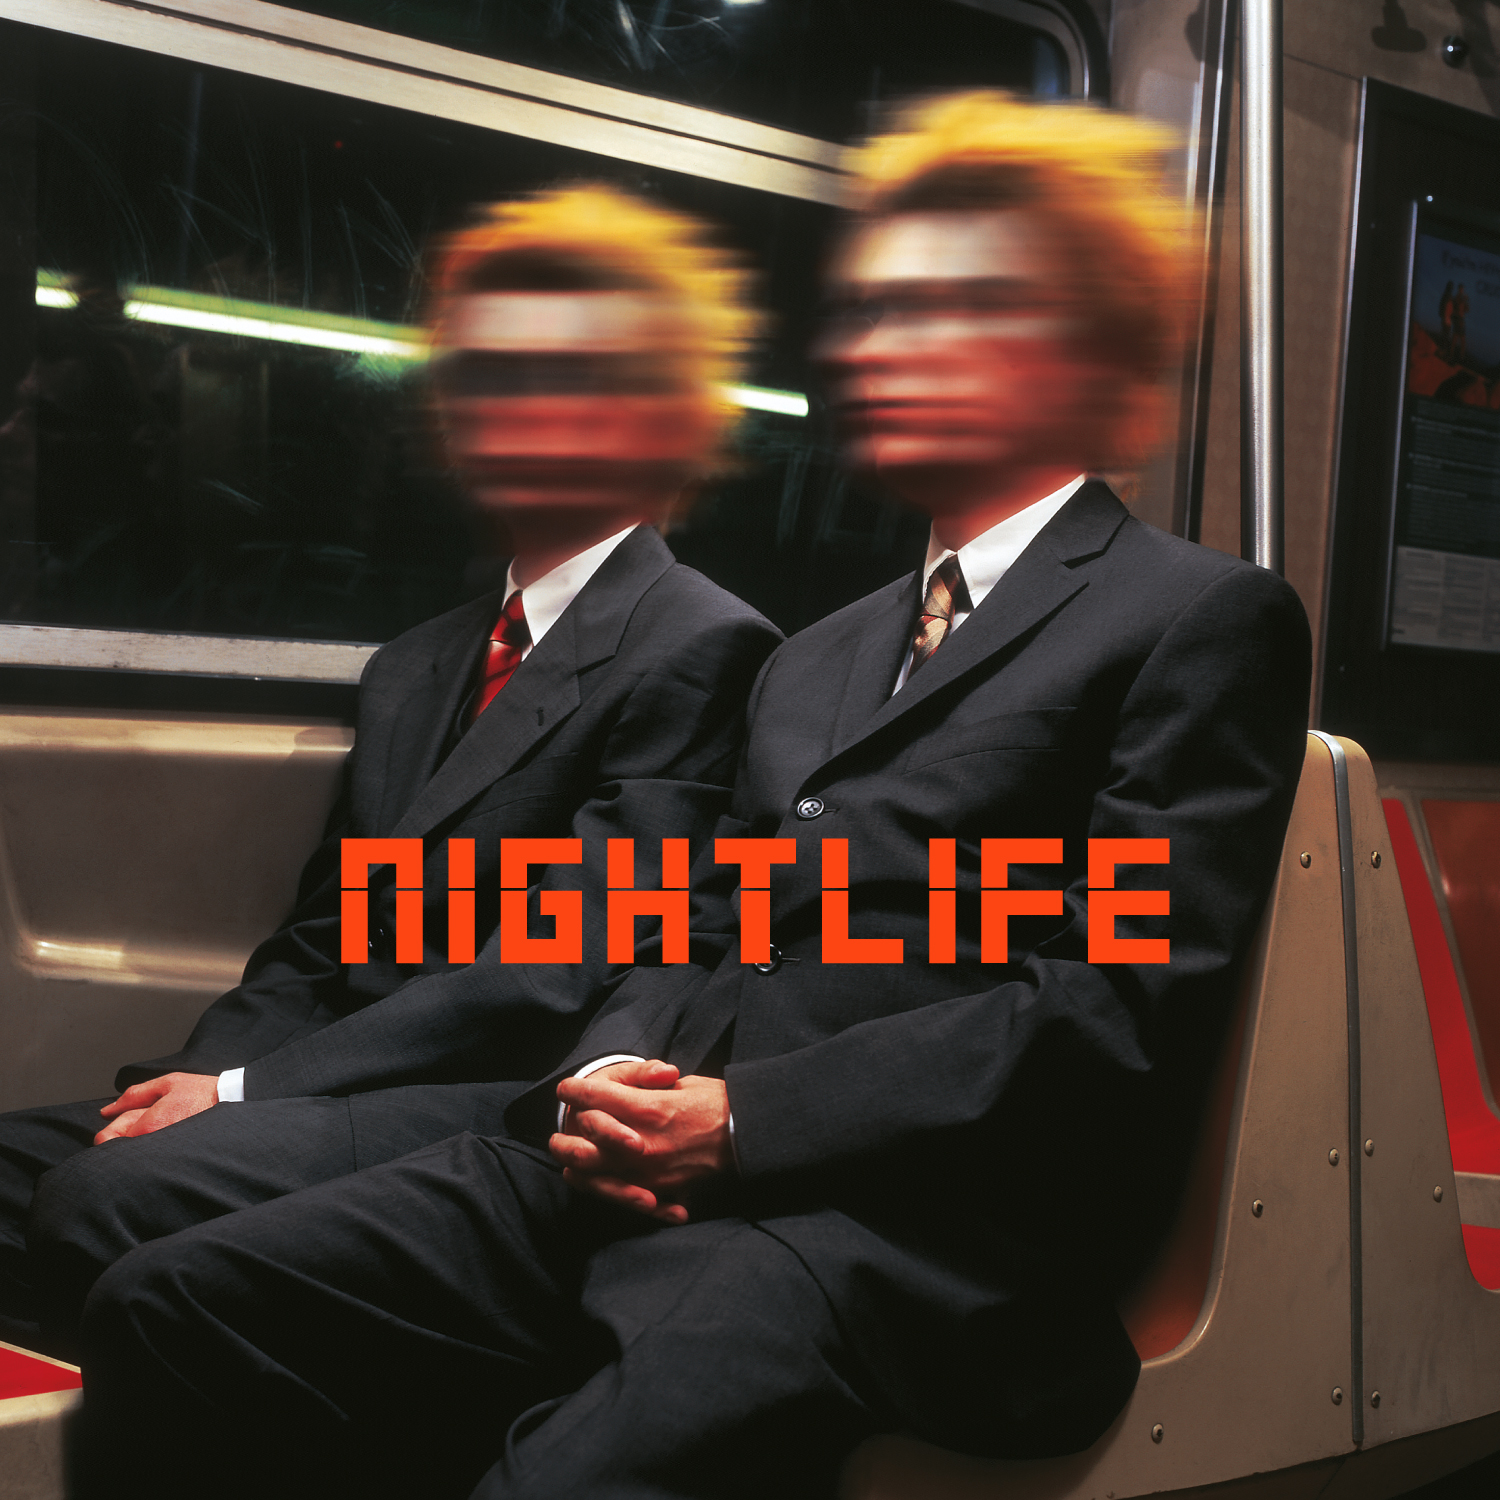 Pet Shop Boys "Nightlife" LP